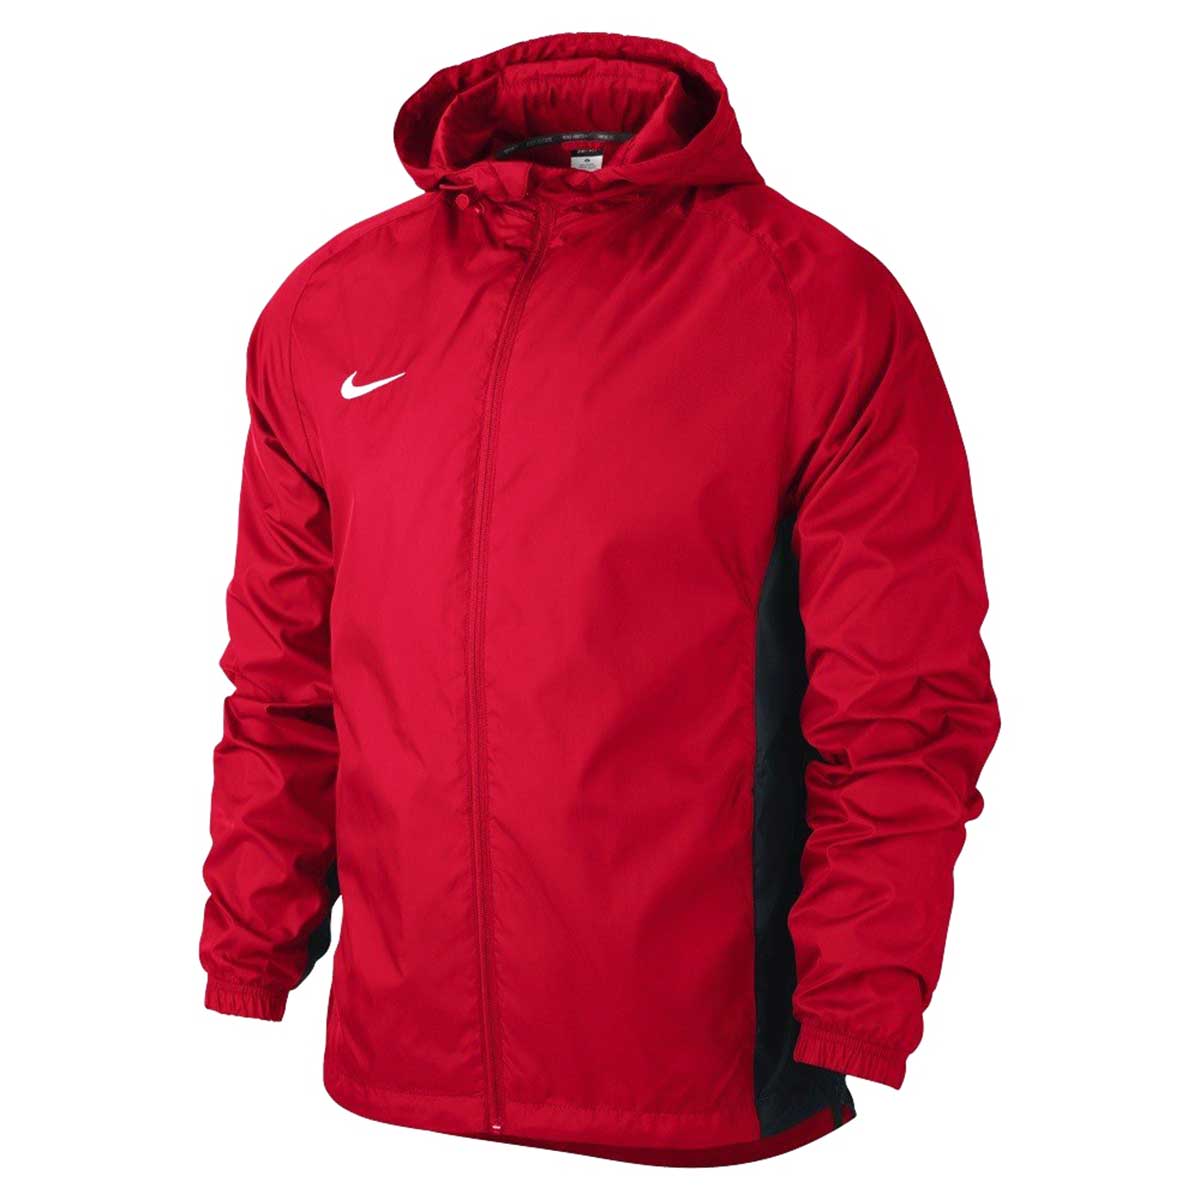 Buy Nike Academy Rain Jacket (Red) Online India| Nike Jackets